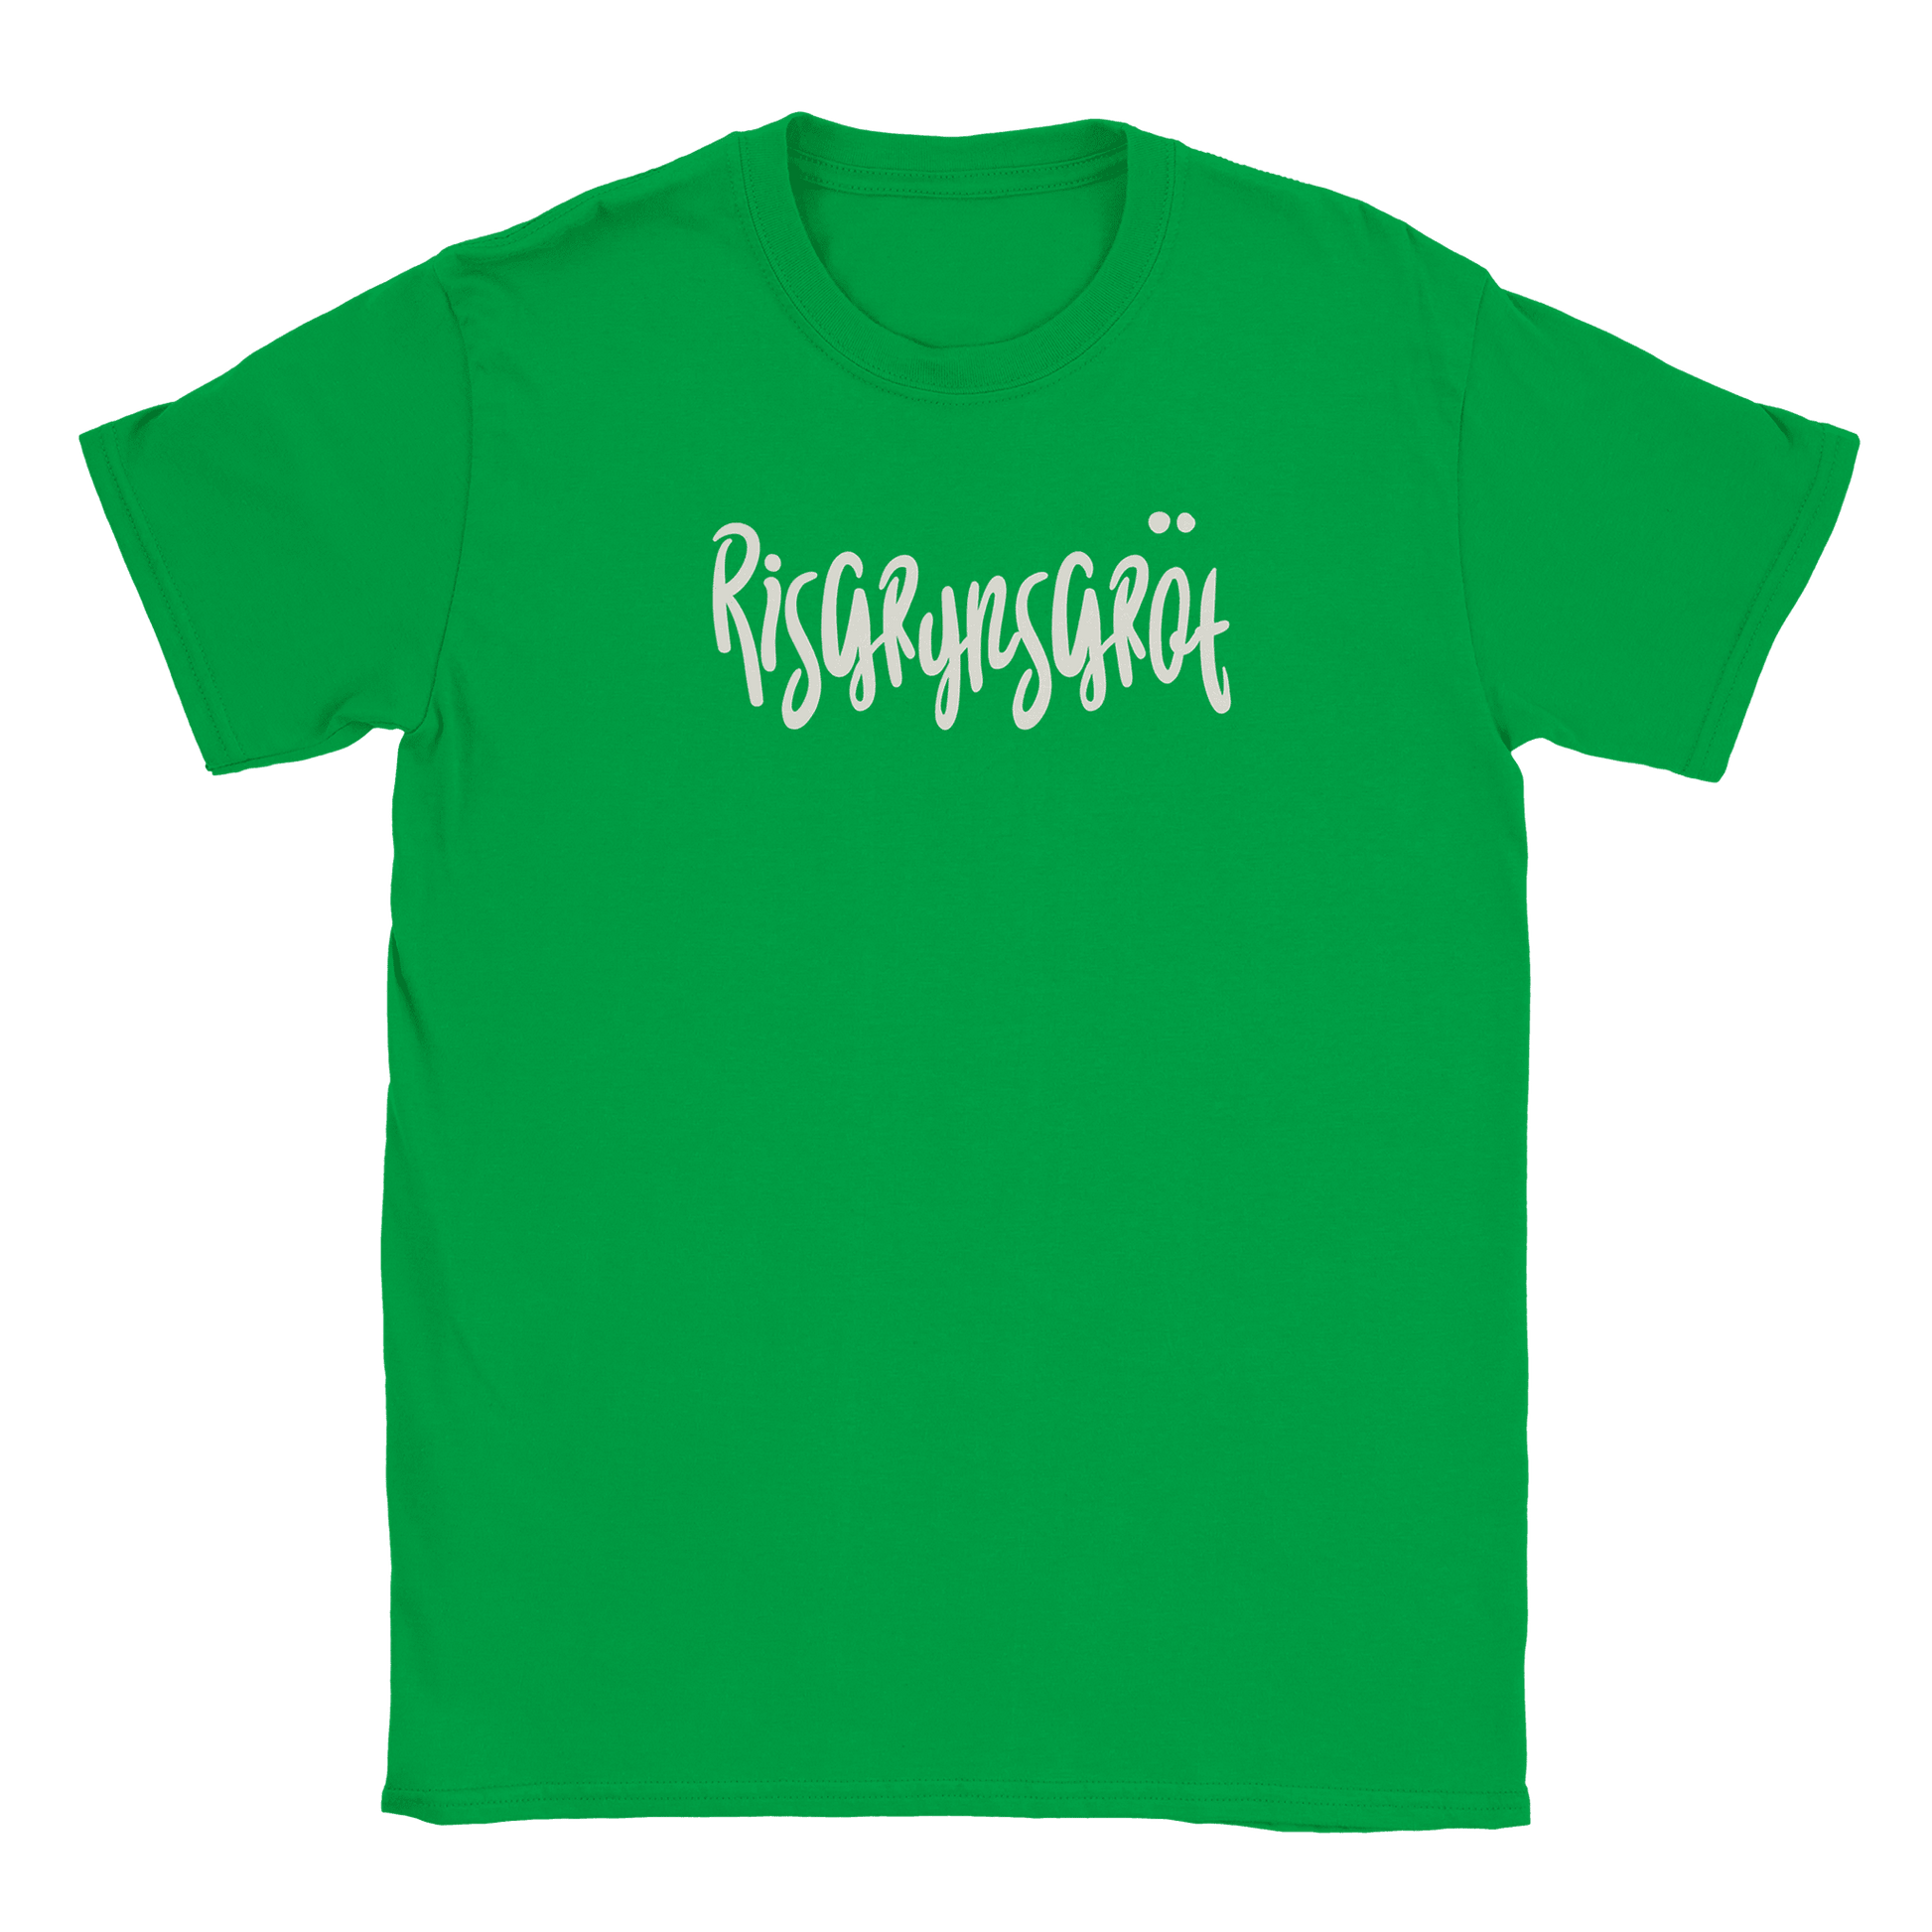 Risgrynsgröt - T-shirt Grön